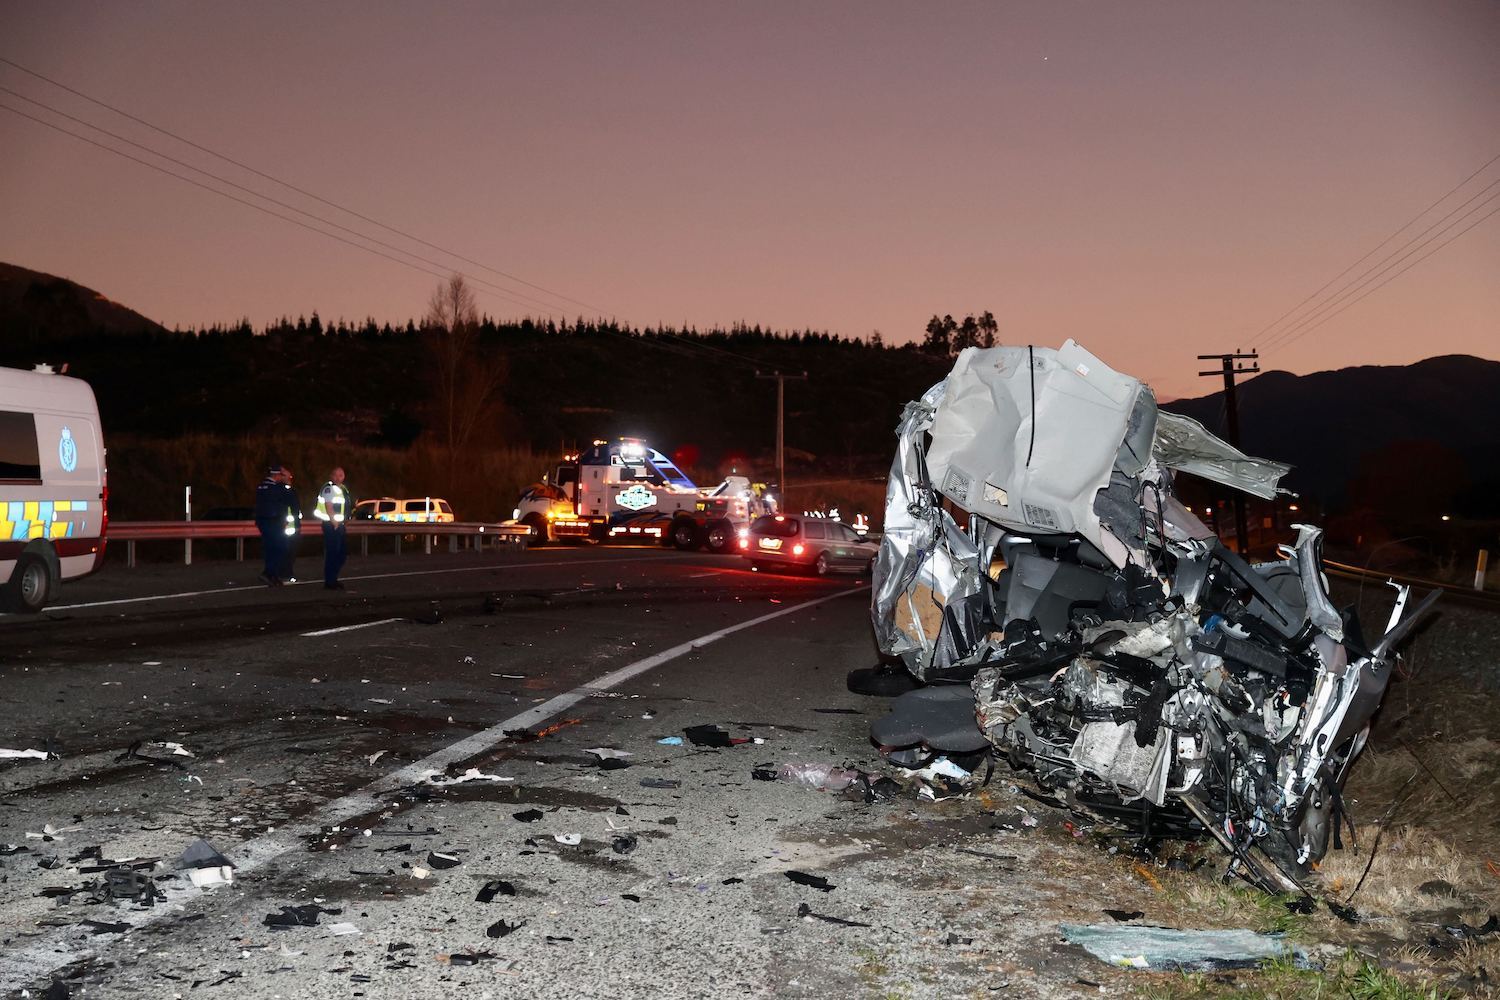 Picton crash: Images reveal true horror of smash that killed seven - NZ  Herald